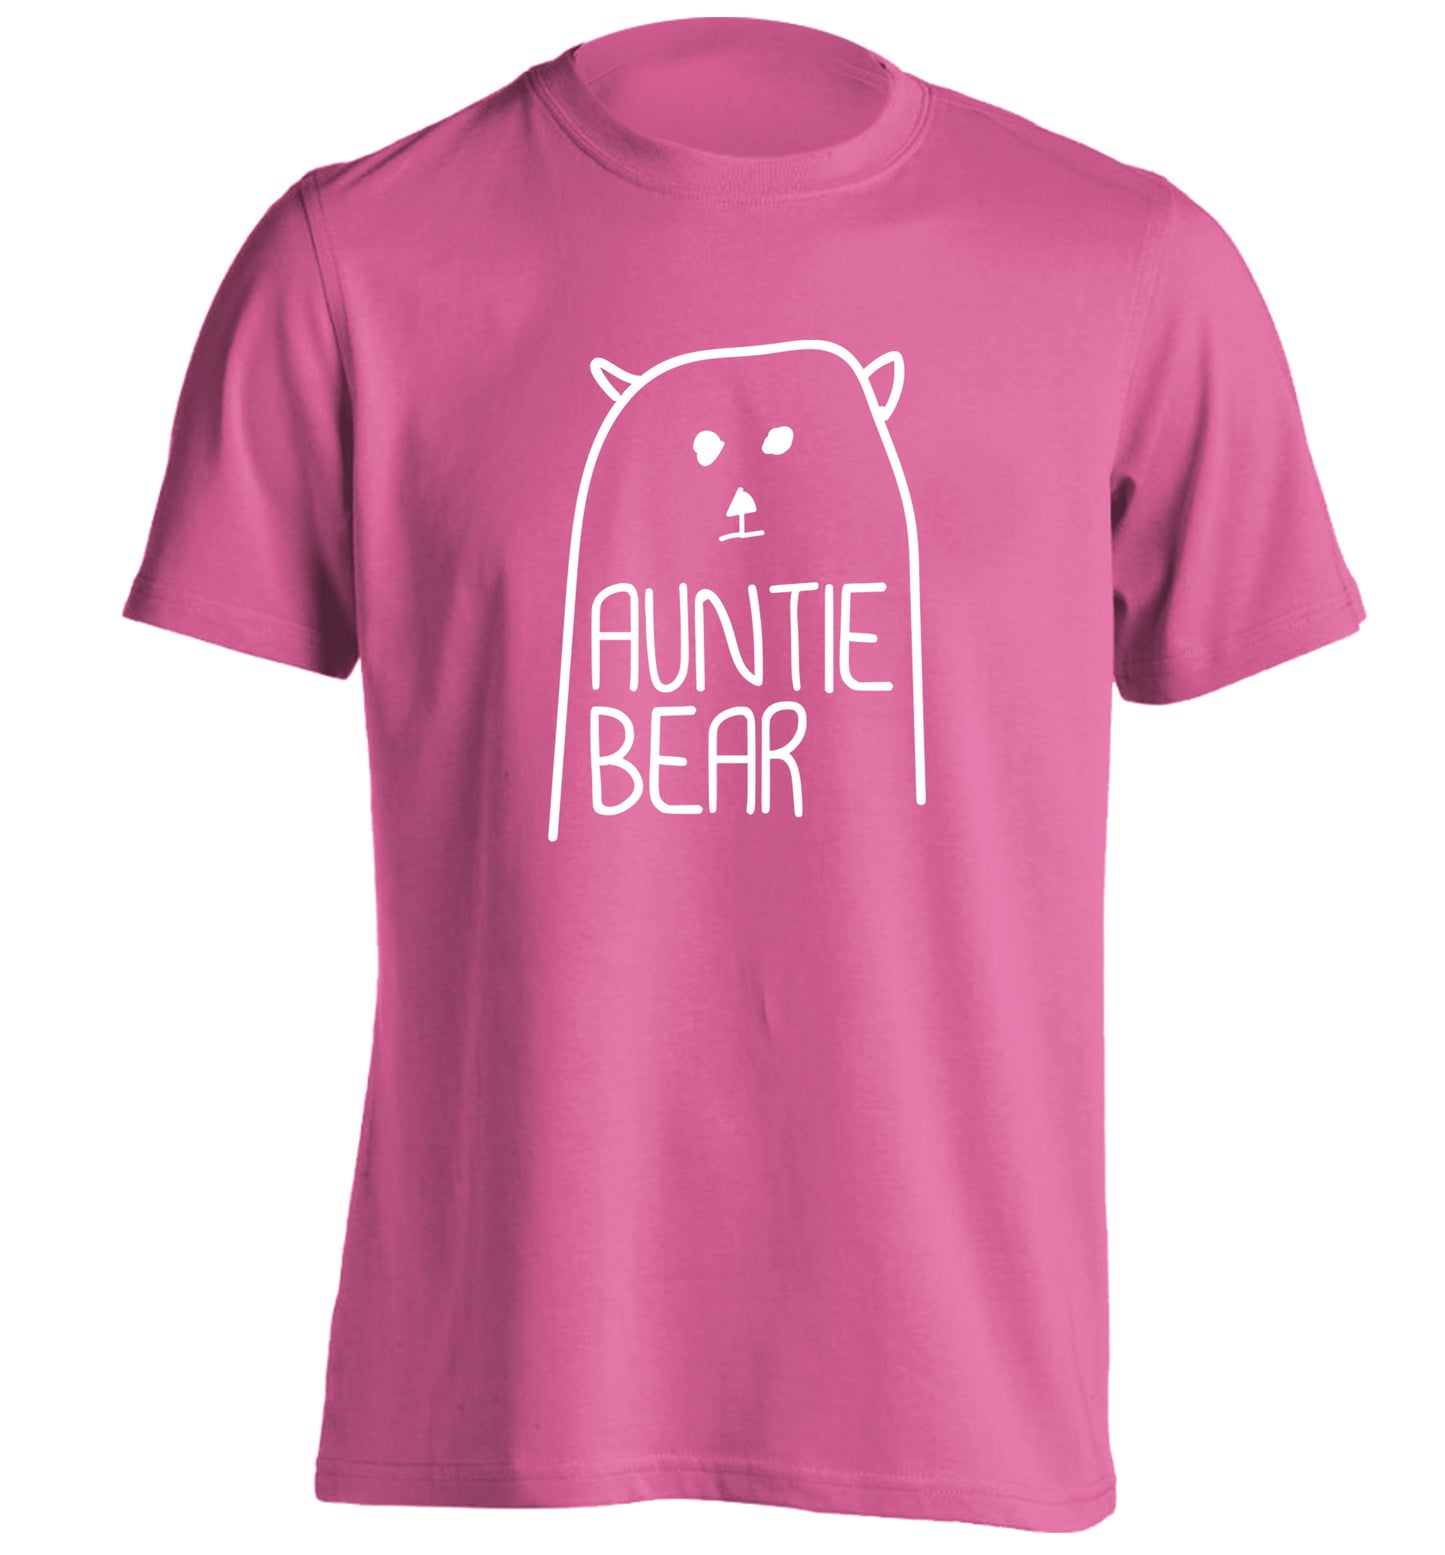 Auntie bear adults unisex pink Tshirt 2XL